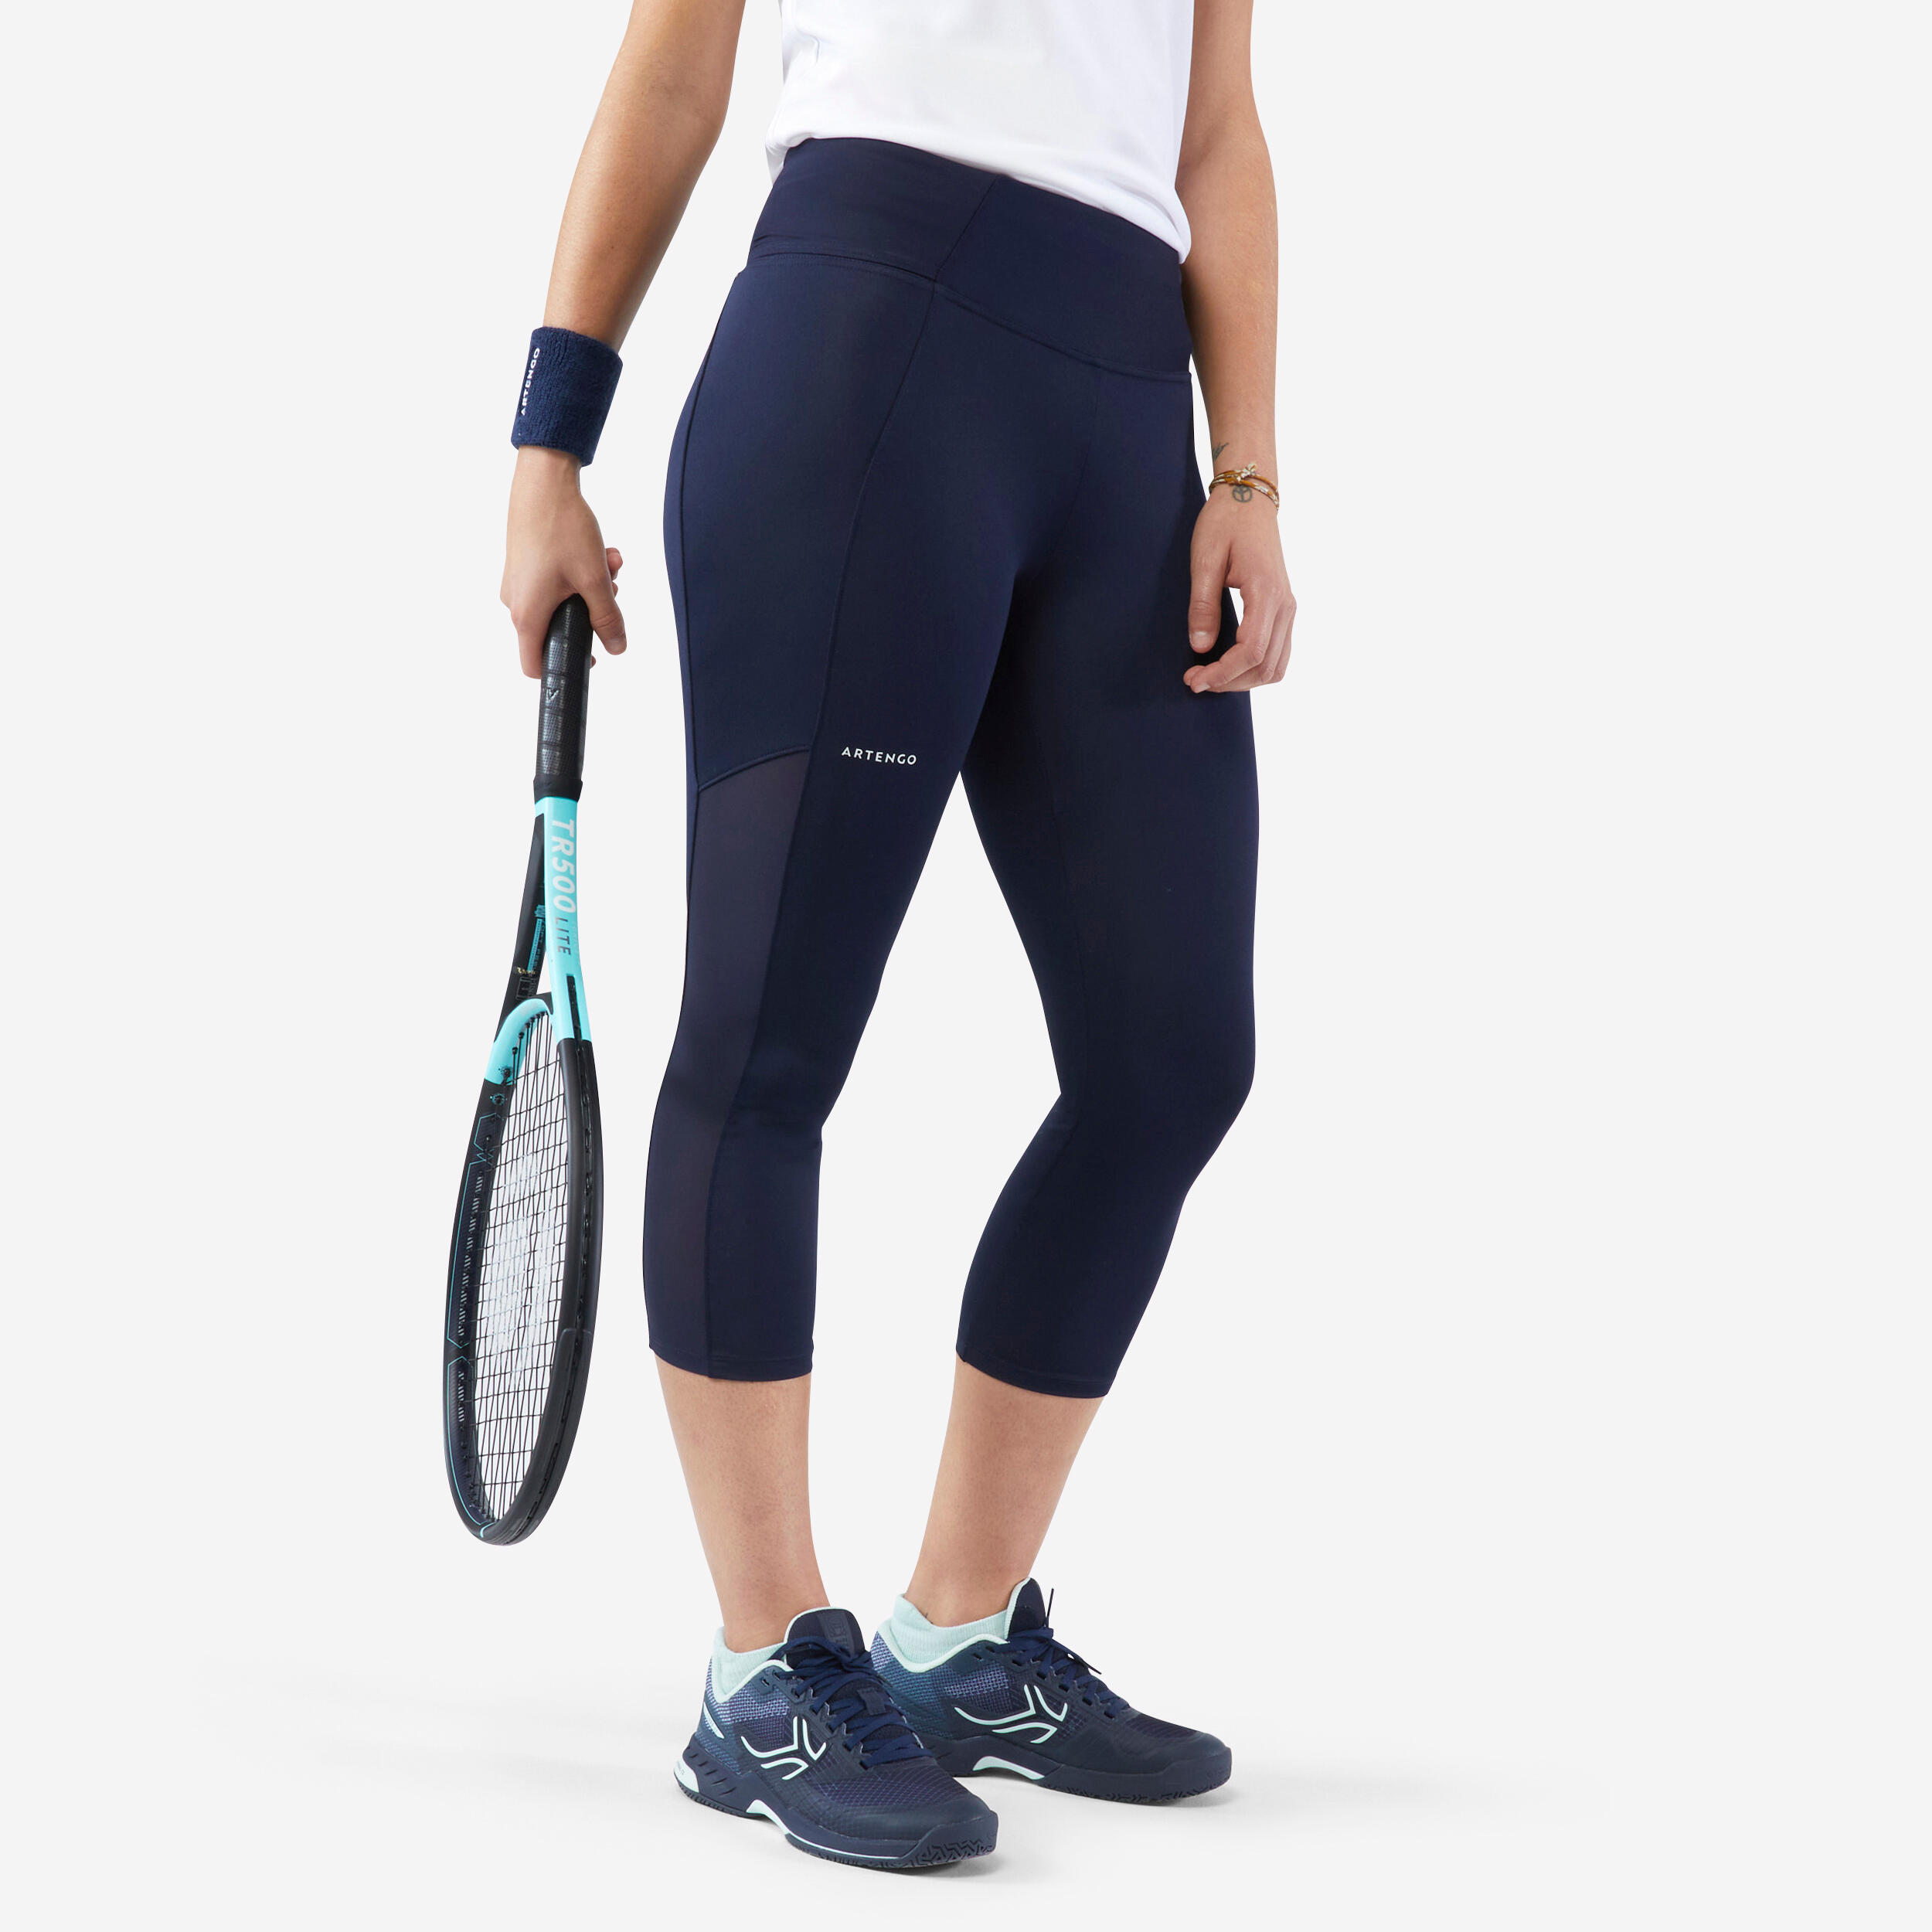 Legging de tennis femme - Dry 900 - ARTENGO